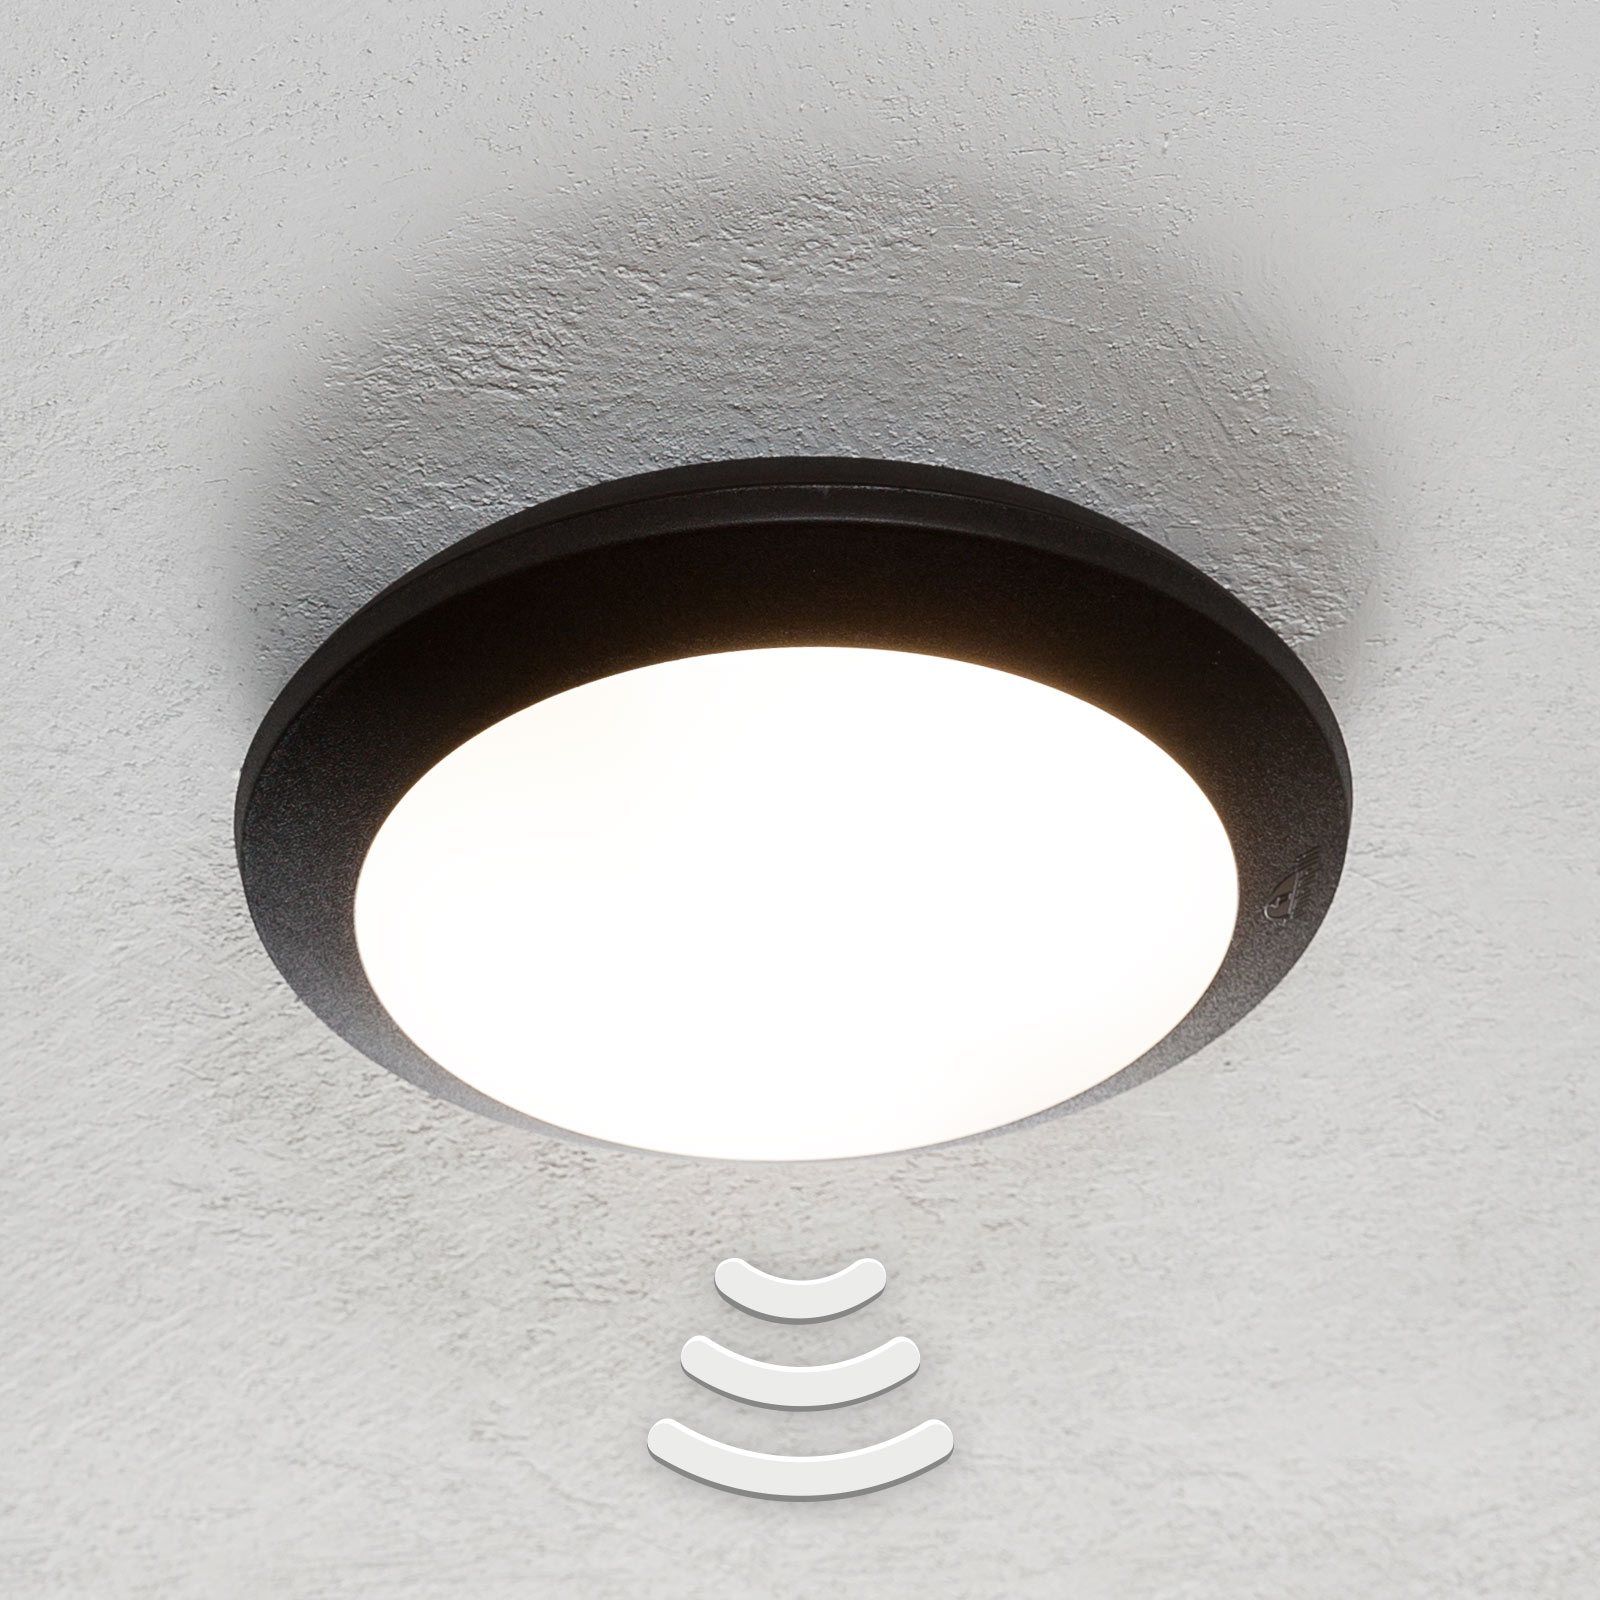 Sensor wall lamp Umberta 2 x E27 in black